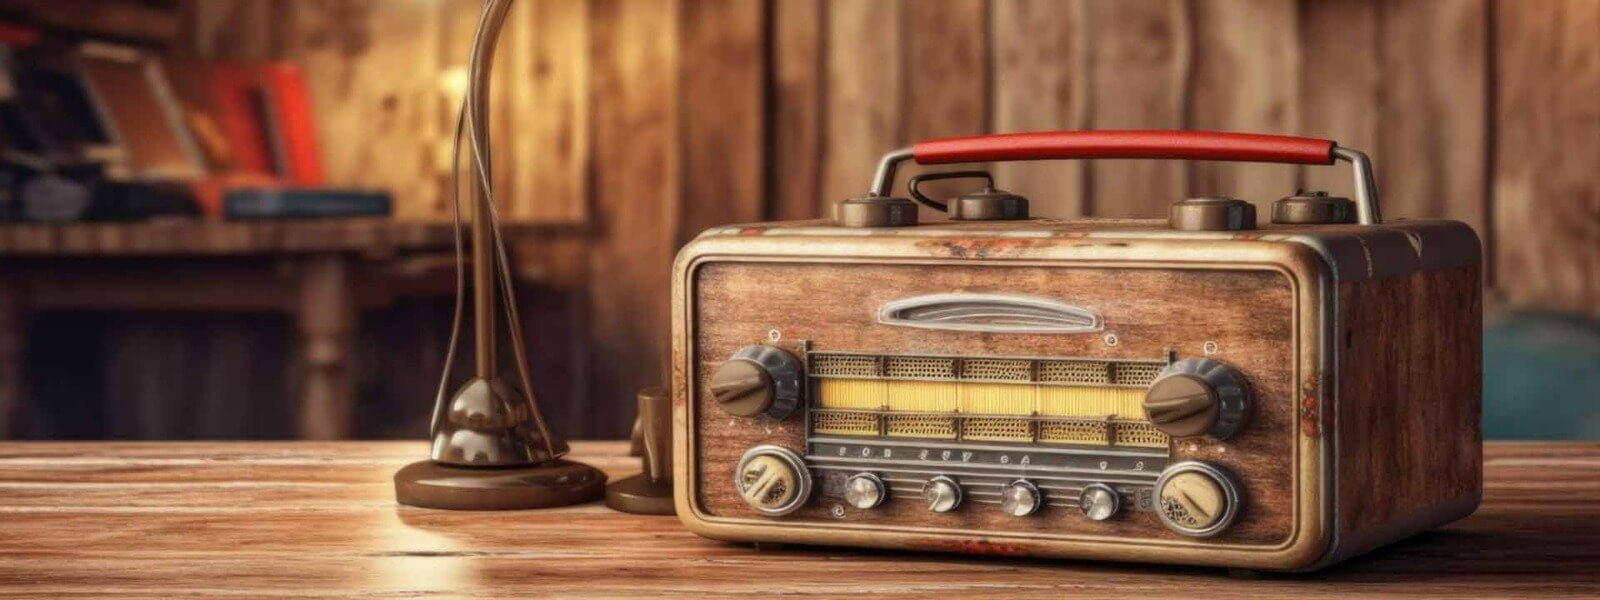 Radyo ve Radyoculuk Serüveni 